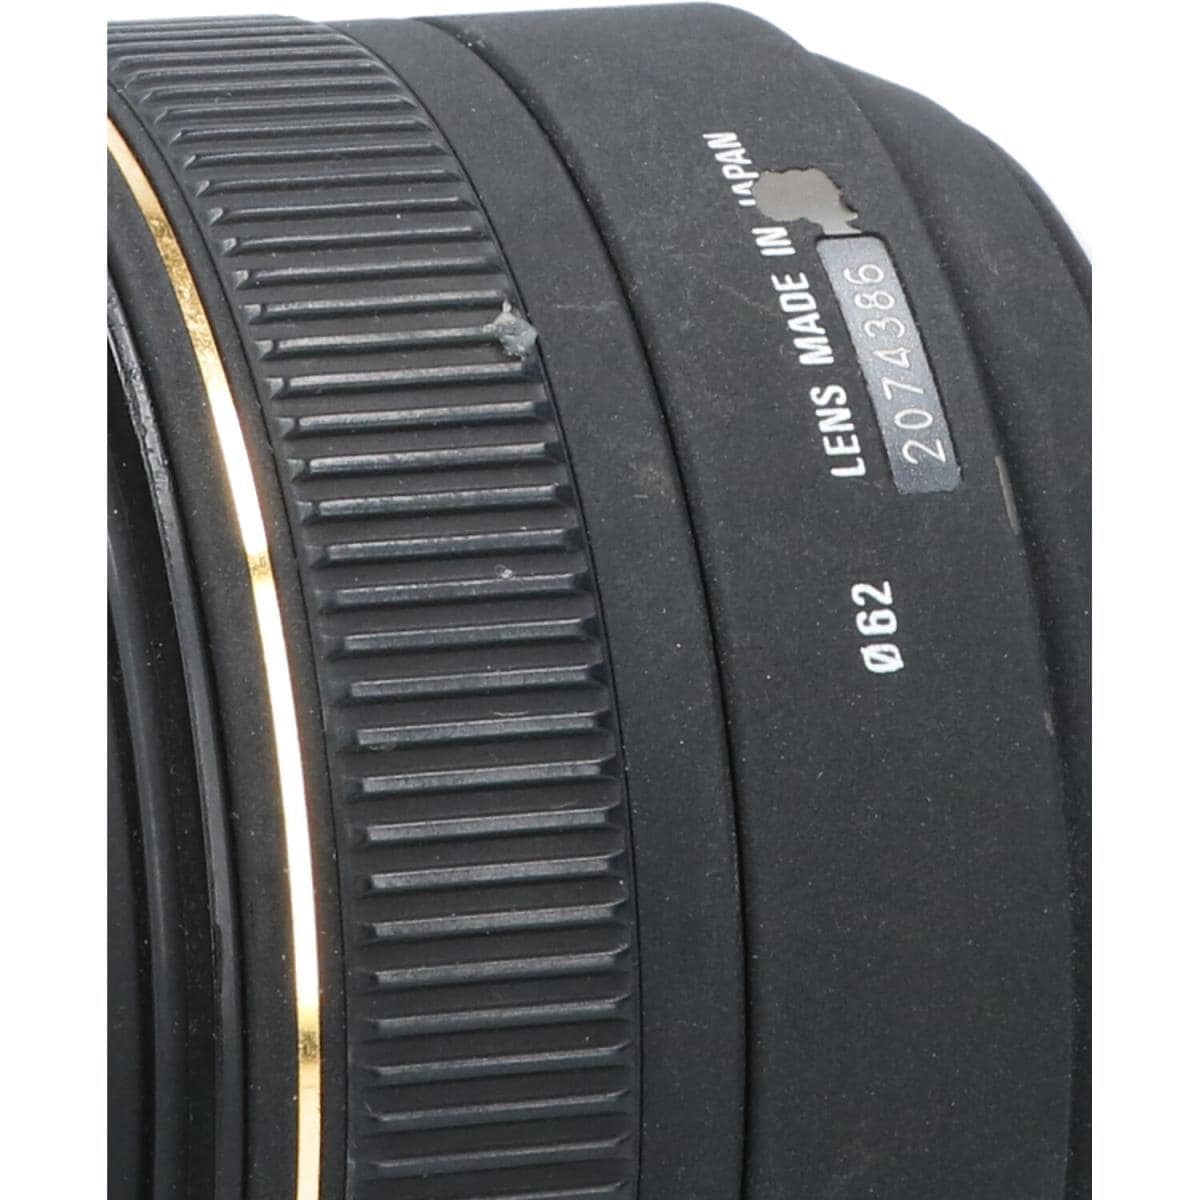 KOMEHYO |SIGMA Nikon 30mm F1.4EX DC HSM|SIGMA|相机|可更换镜头|自动 